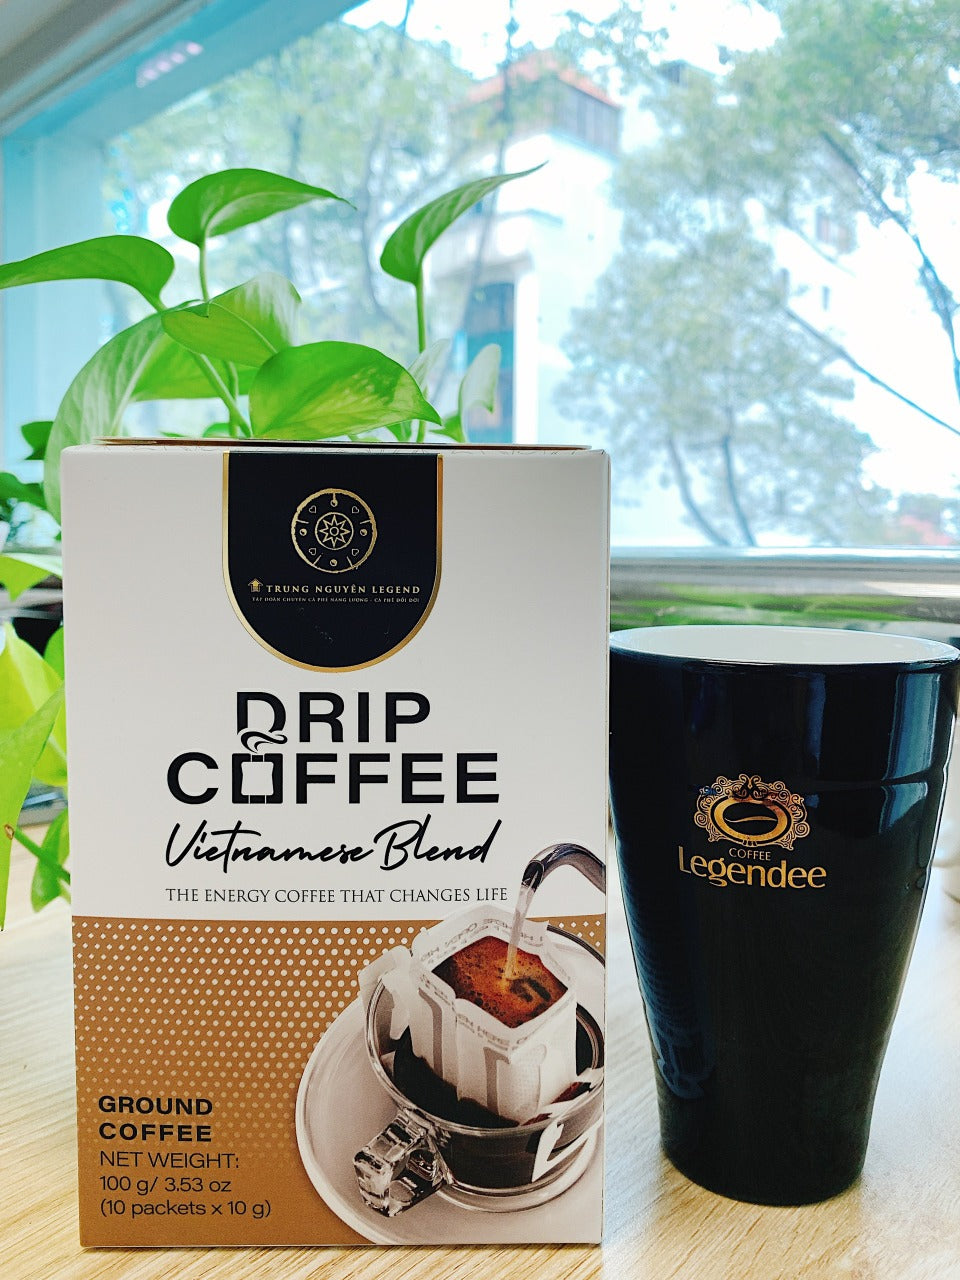 DRIP COFFEE - VIETNAMESE BLEND